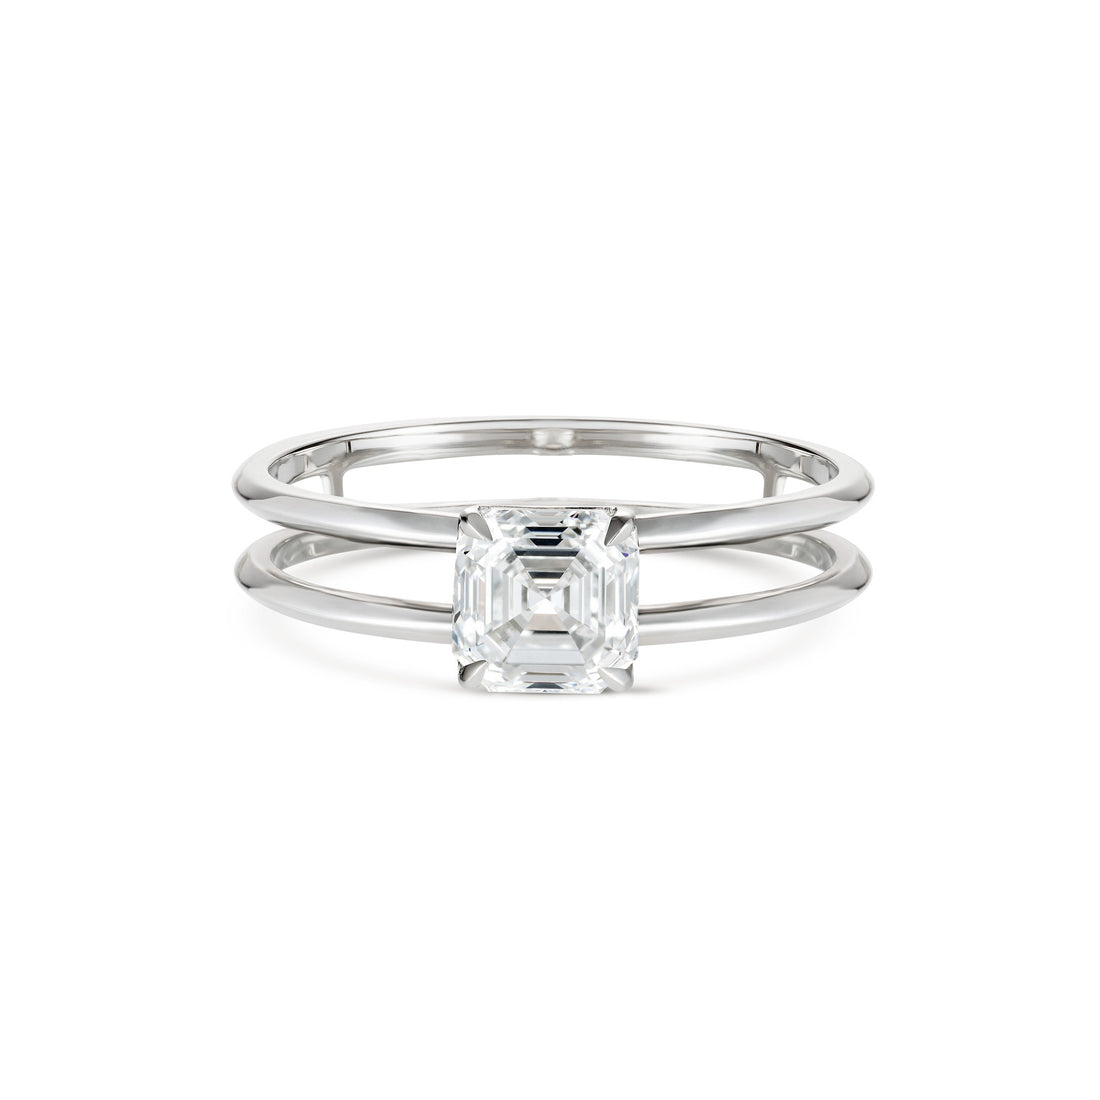  Carina Asscher Cut Diamond Ring by Rachel Boston | The Cut London